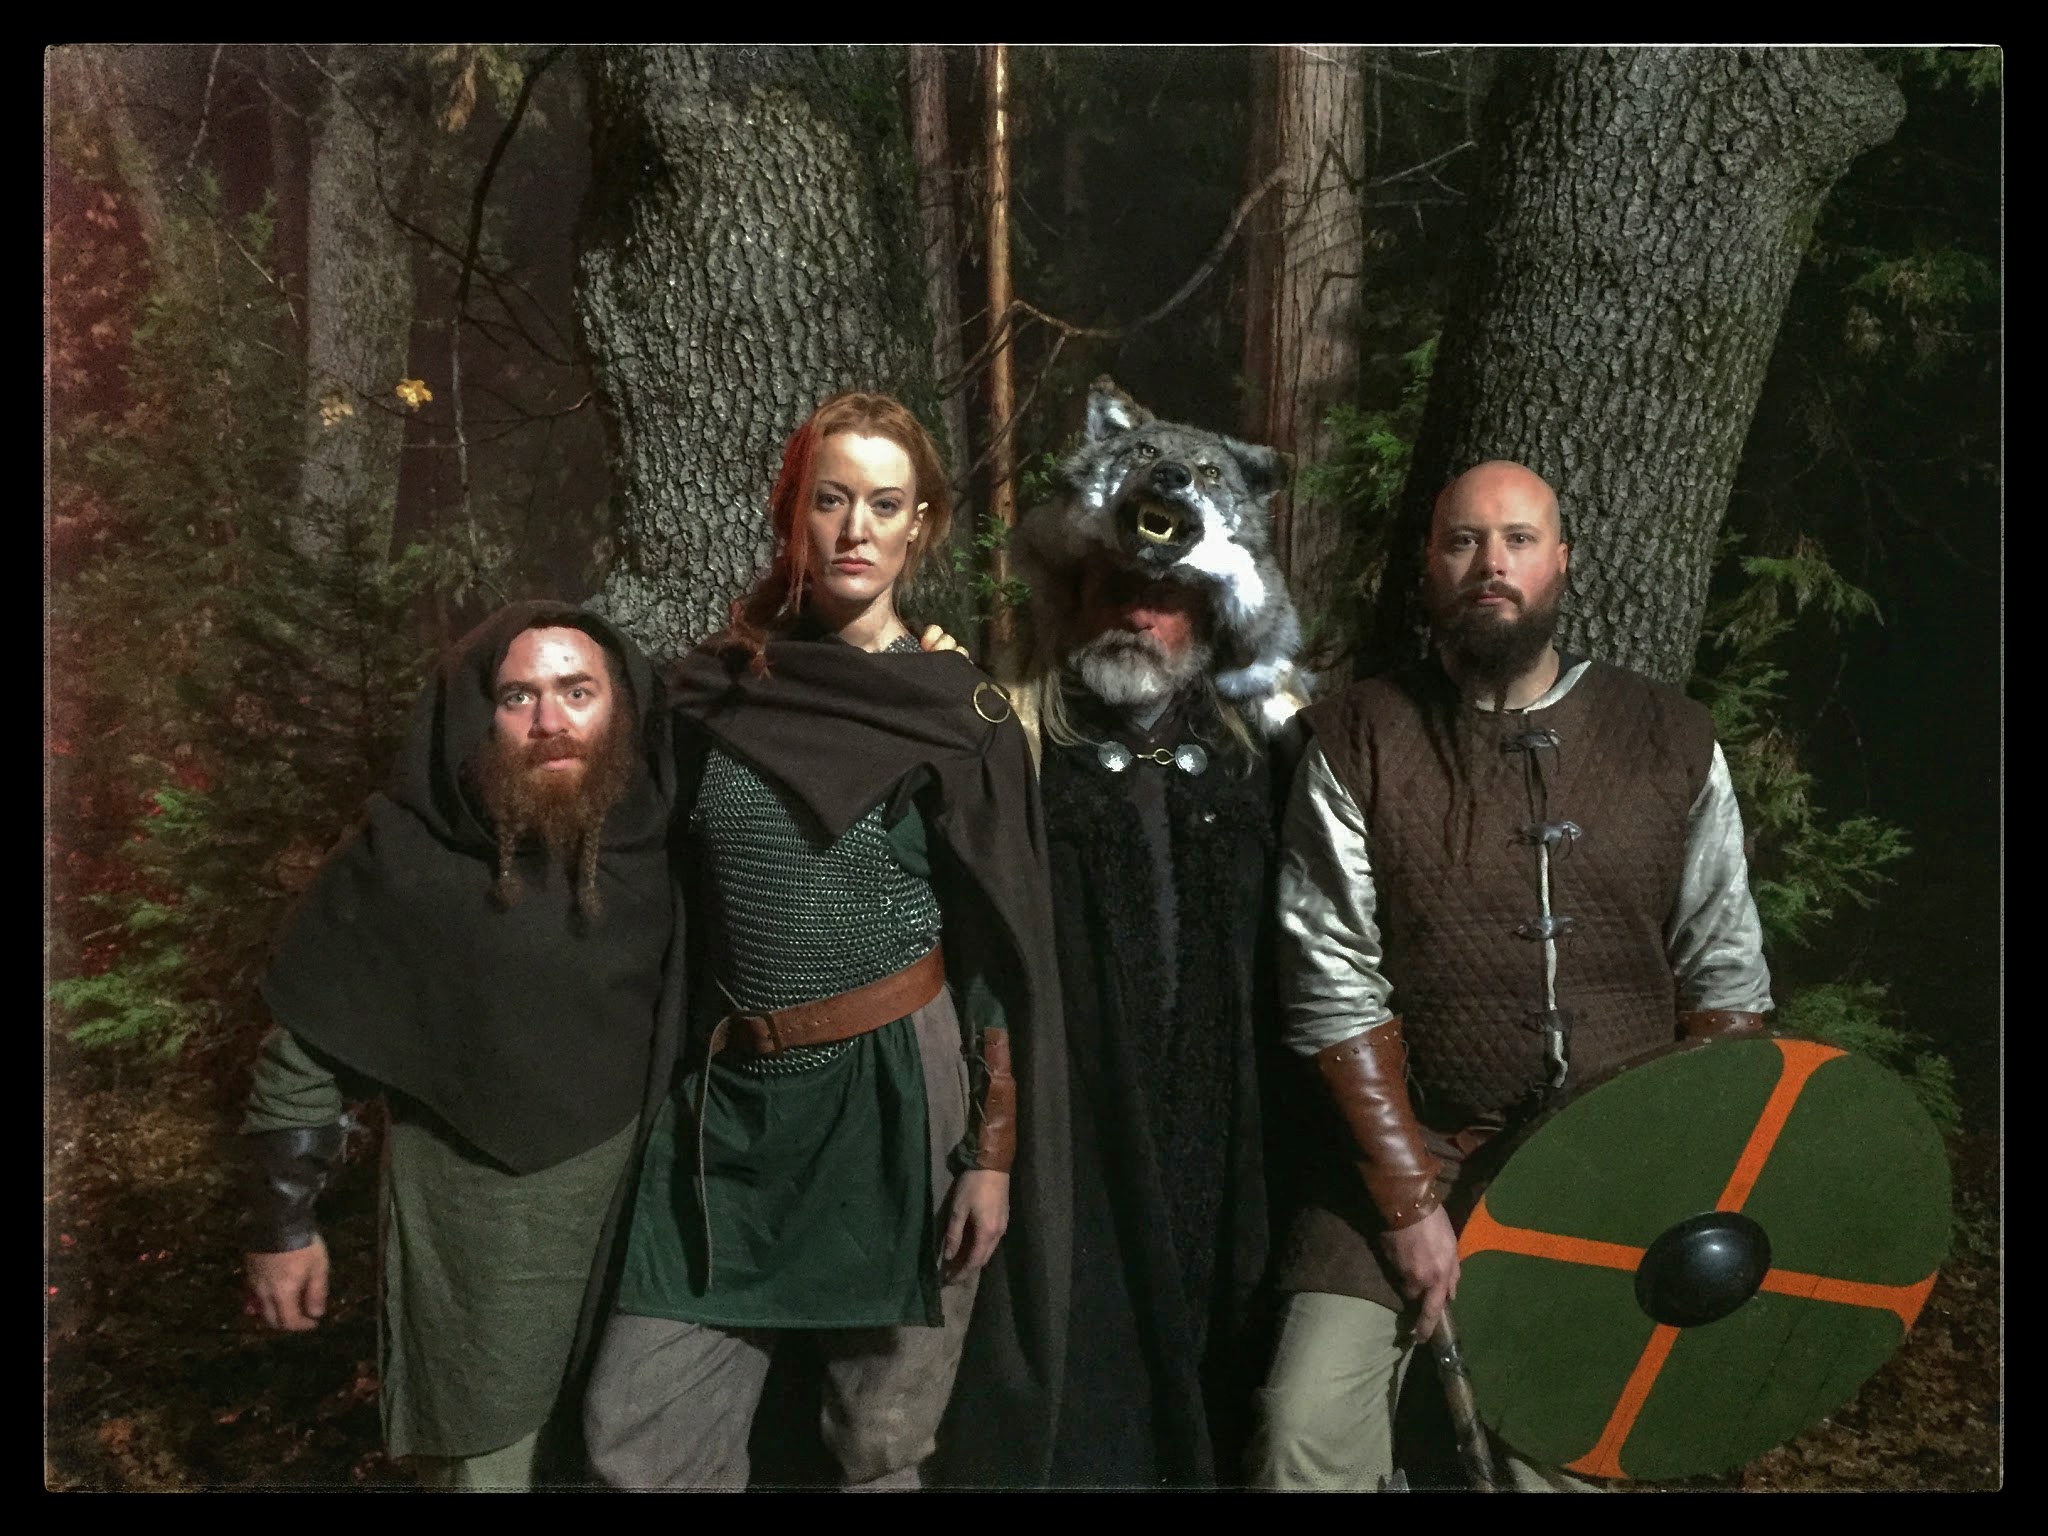 Total Awesome Viking Power with Jeremiah Benjamin, Adele Rene and Schno Mozingo